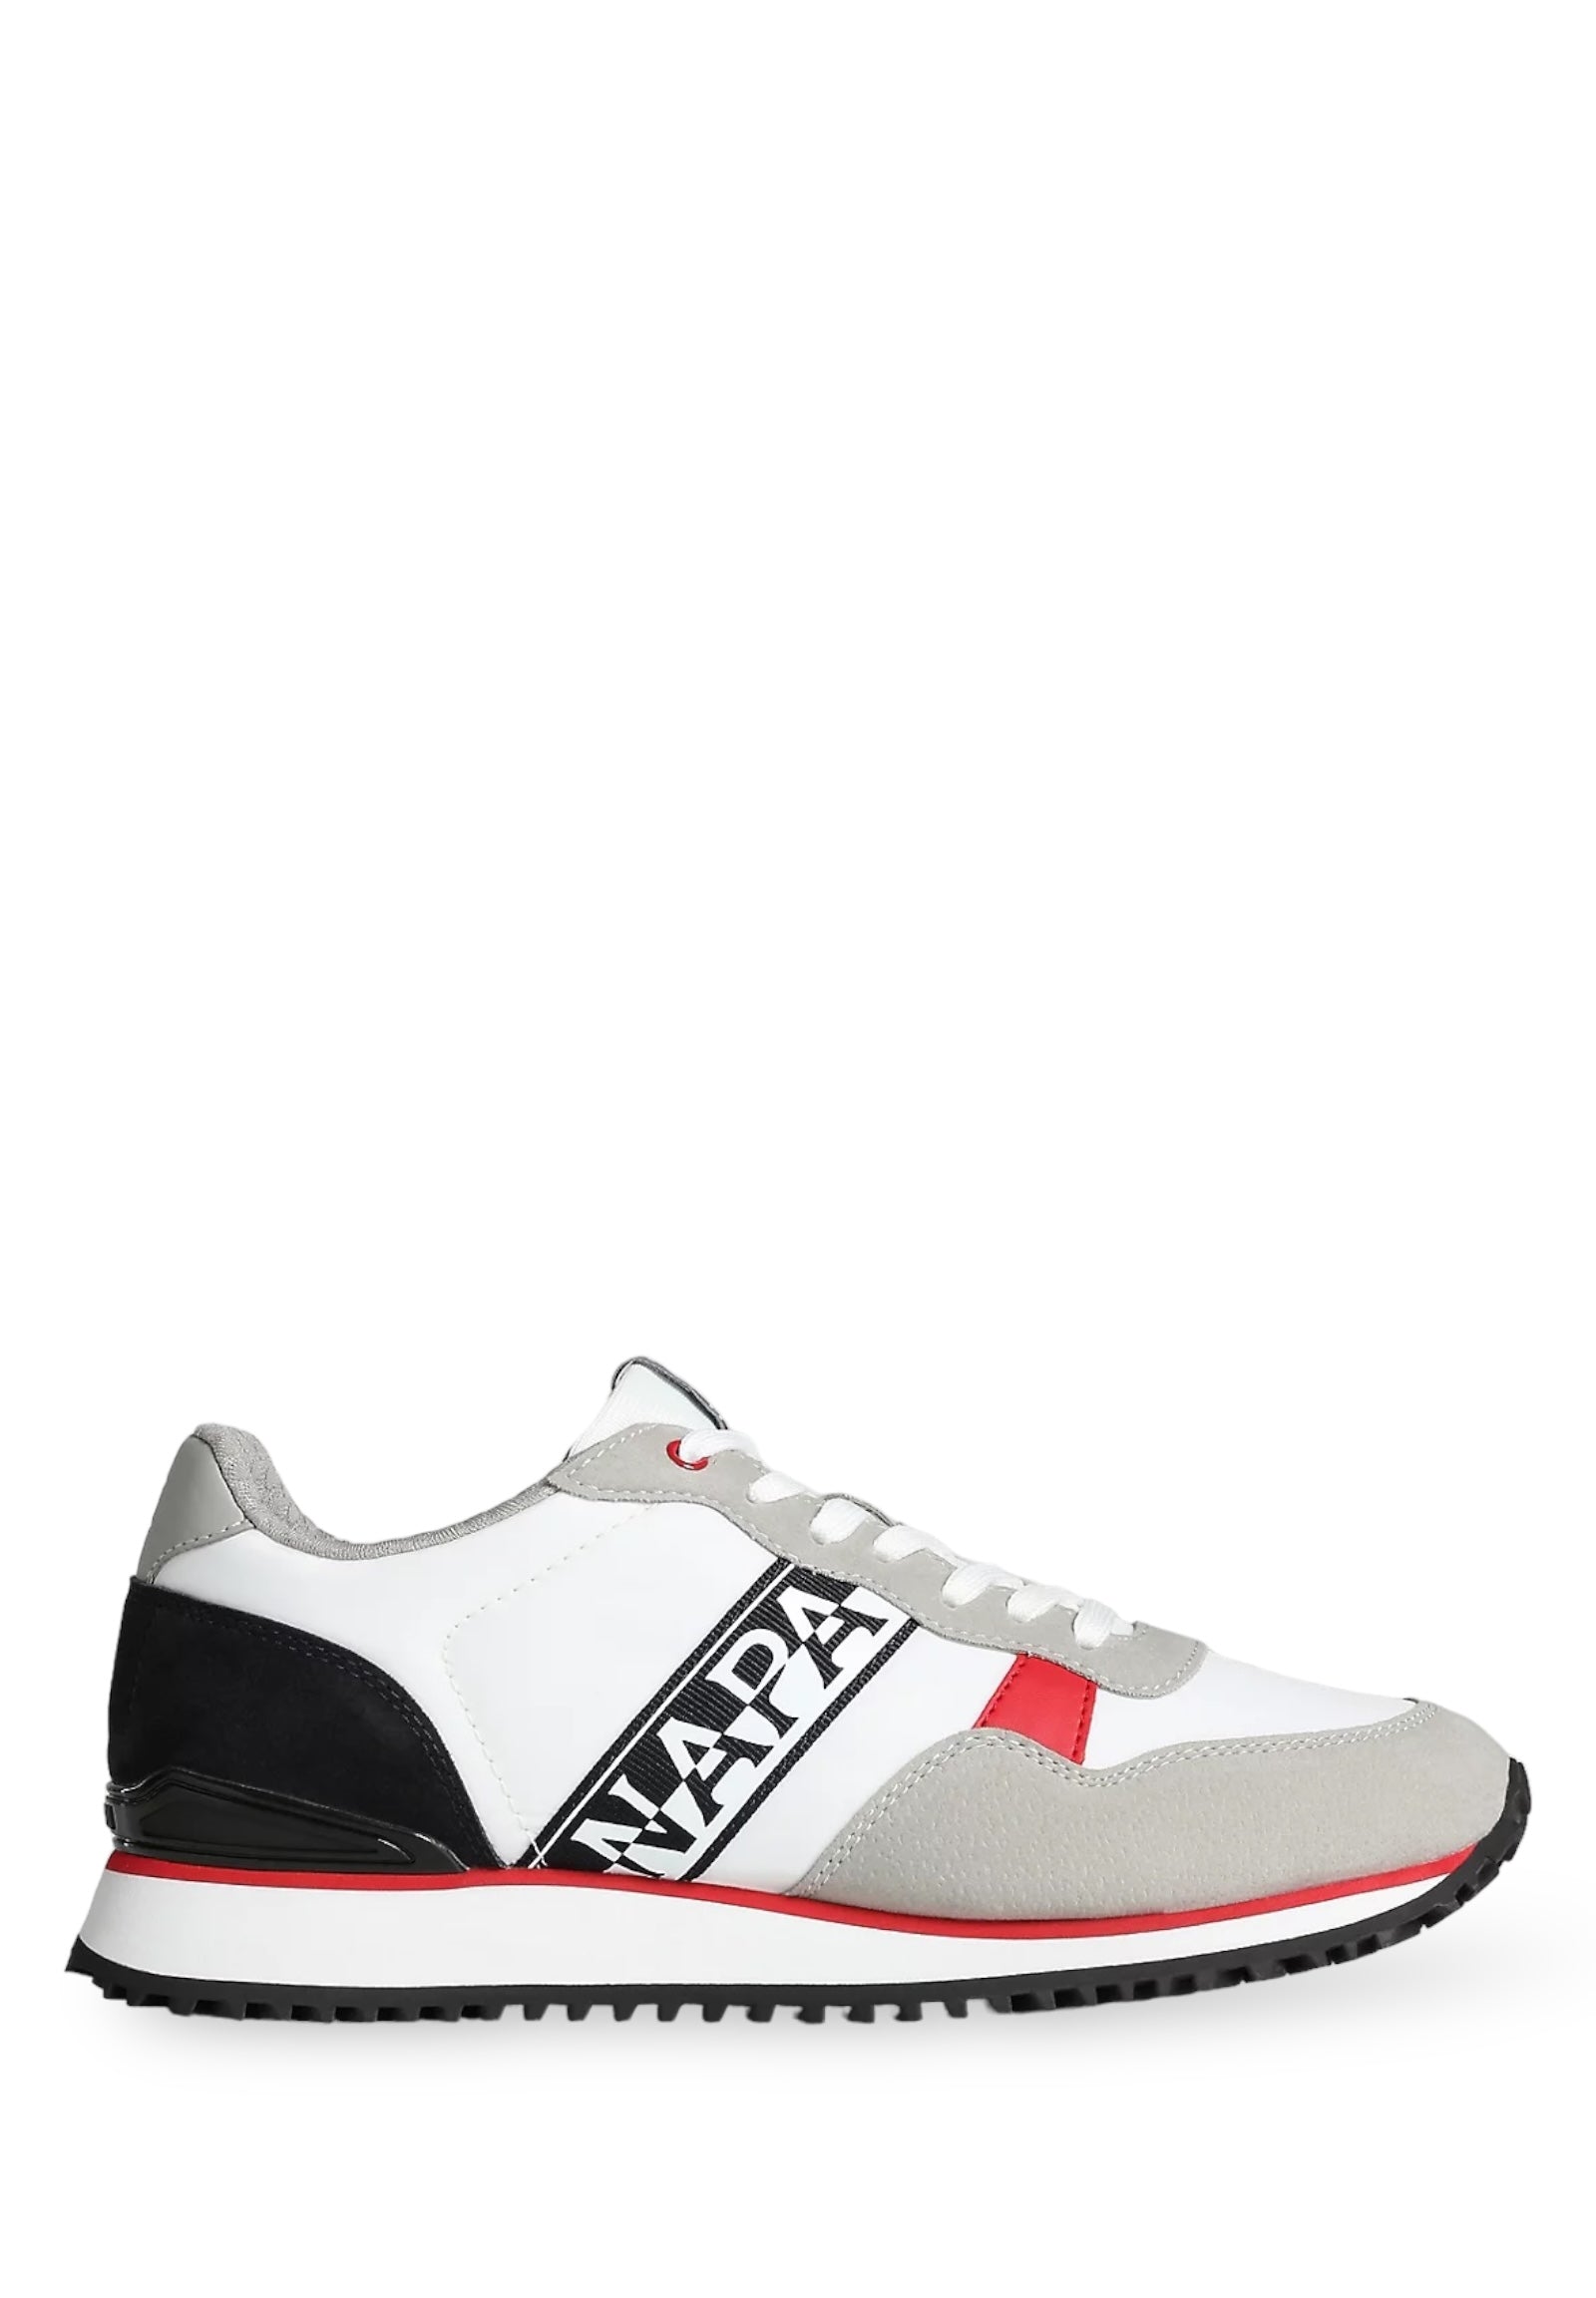 Napapijri Sneakers Np0a4hl5co WhitE-NavY-Red